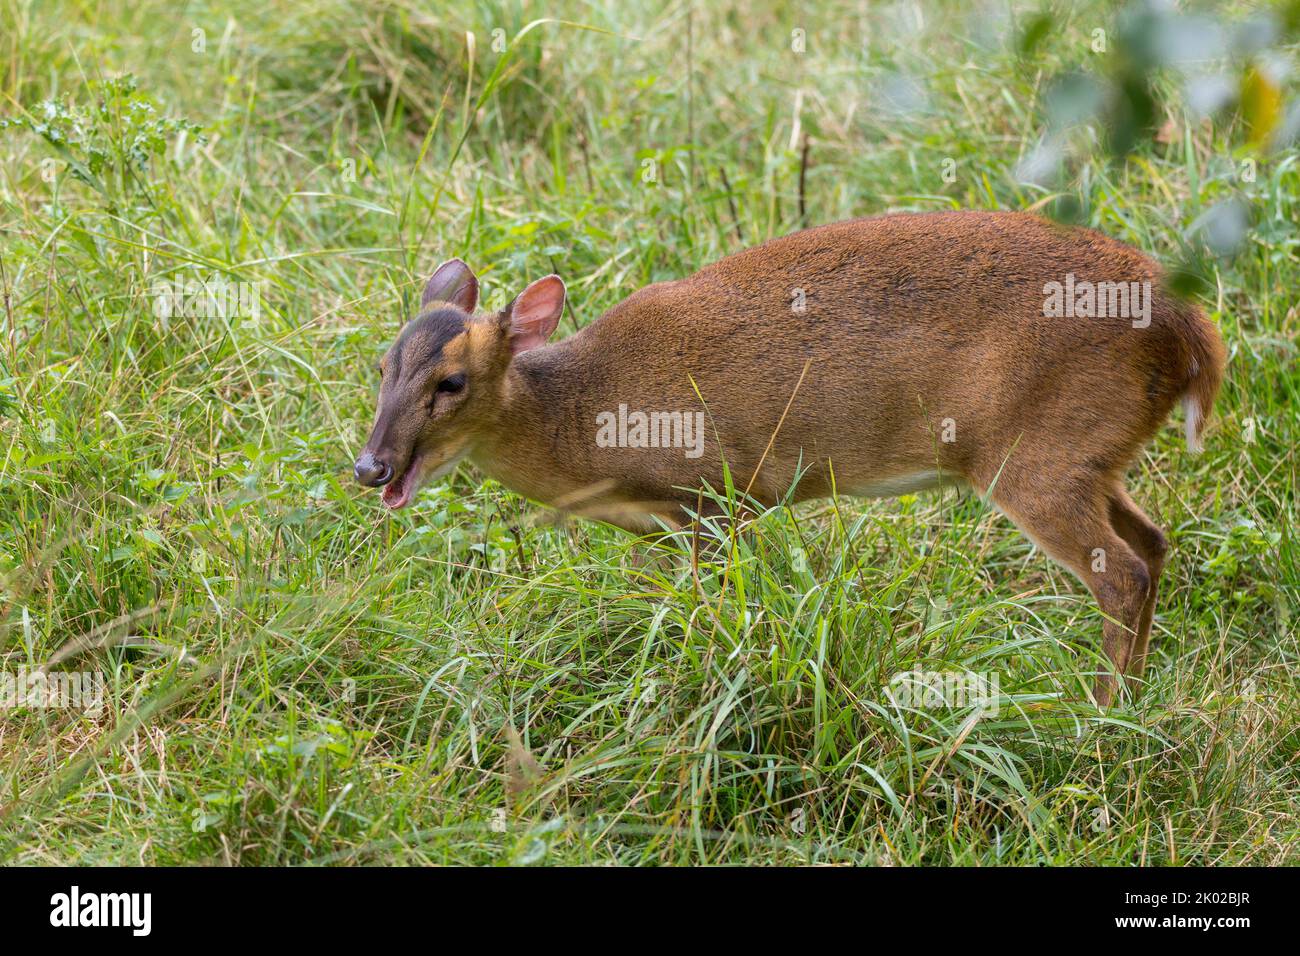 Muntjac deer (muntiacus reevesi) smallest british deer reddish brown coat with white underside. Captive animal shares red squirrel enclosure Stock Photo